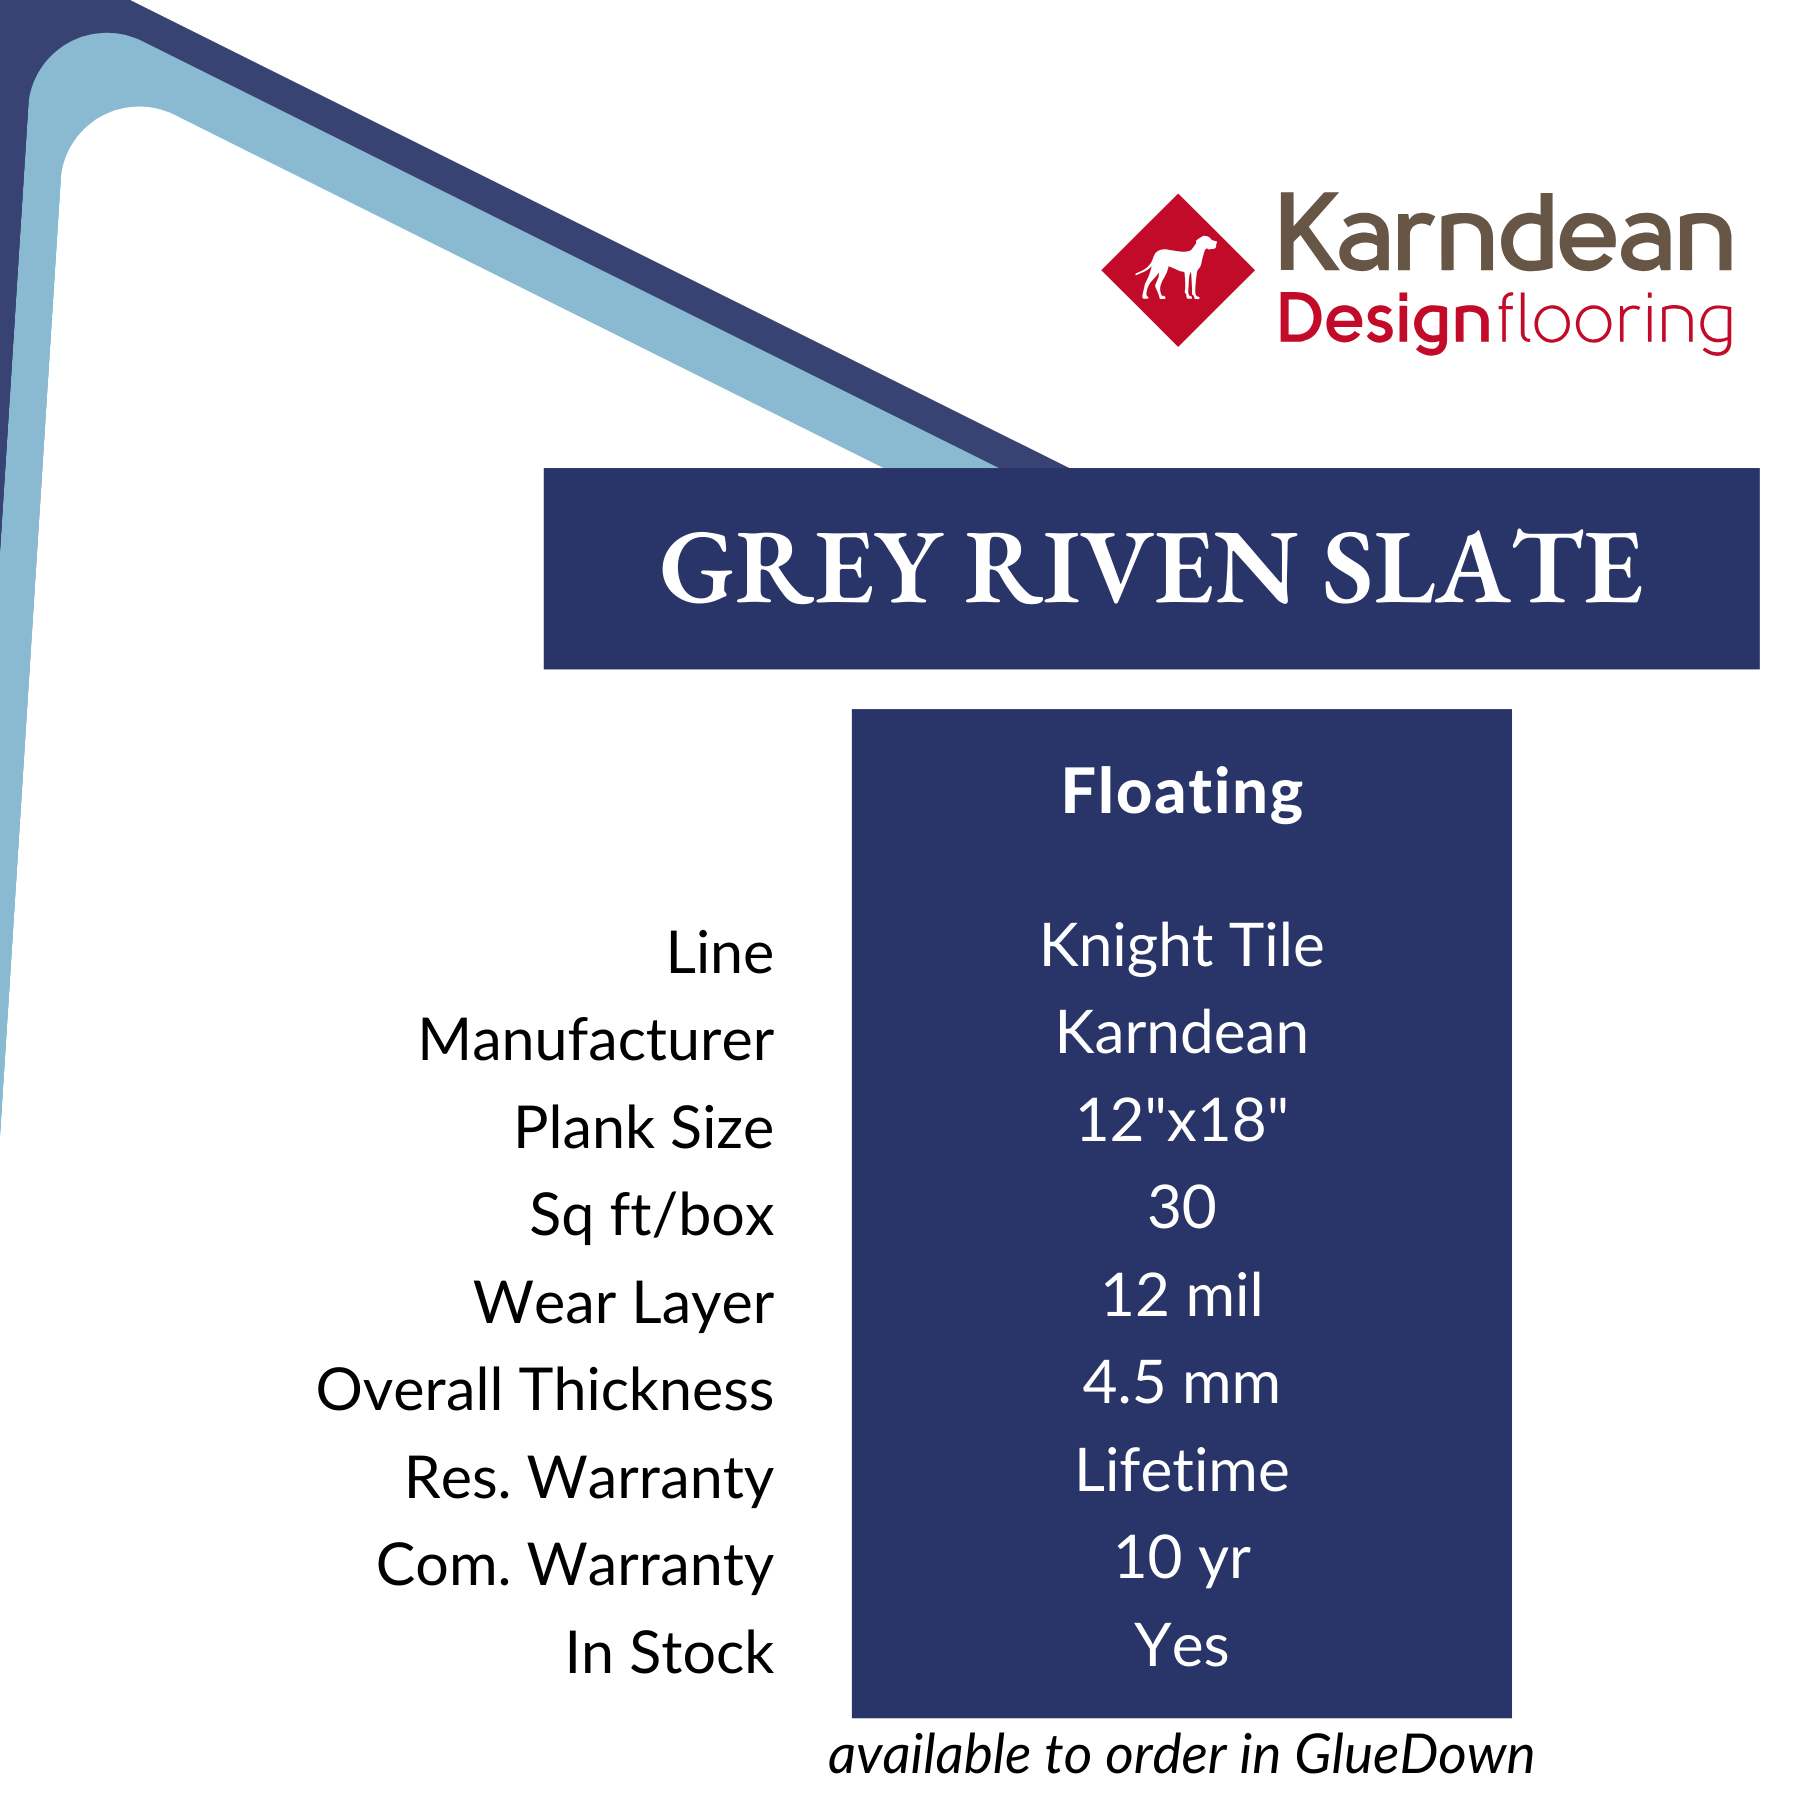 Grey Riven Slate Vinyl Flooring from Karndean, sold at Calhoun’s, Springfield, IL specs